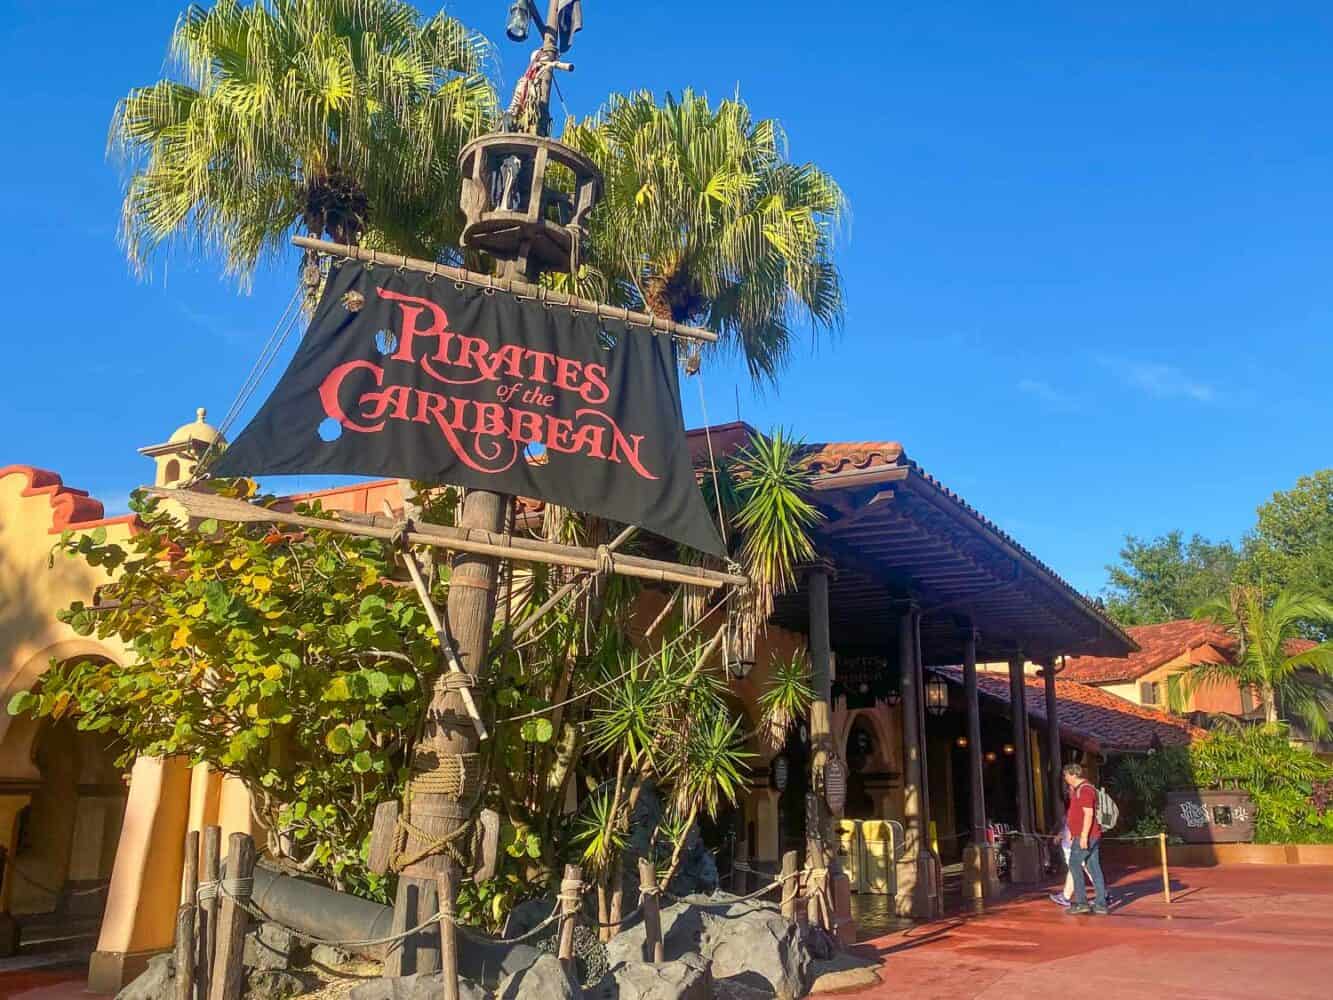 Entrance to Pirates of the Caribbean, Magic Kingdom, Disney World 